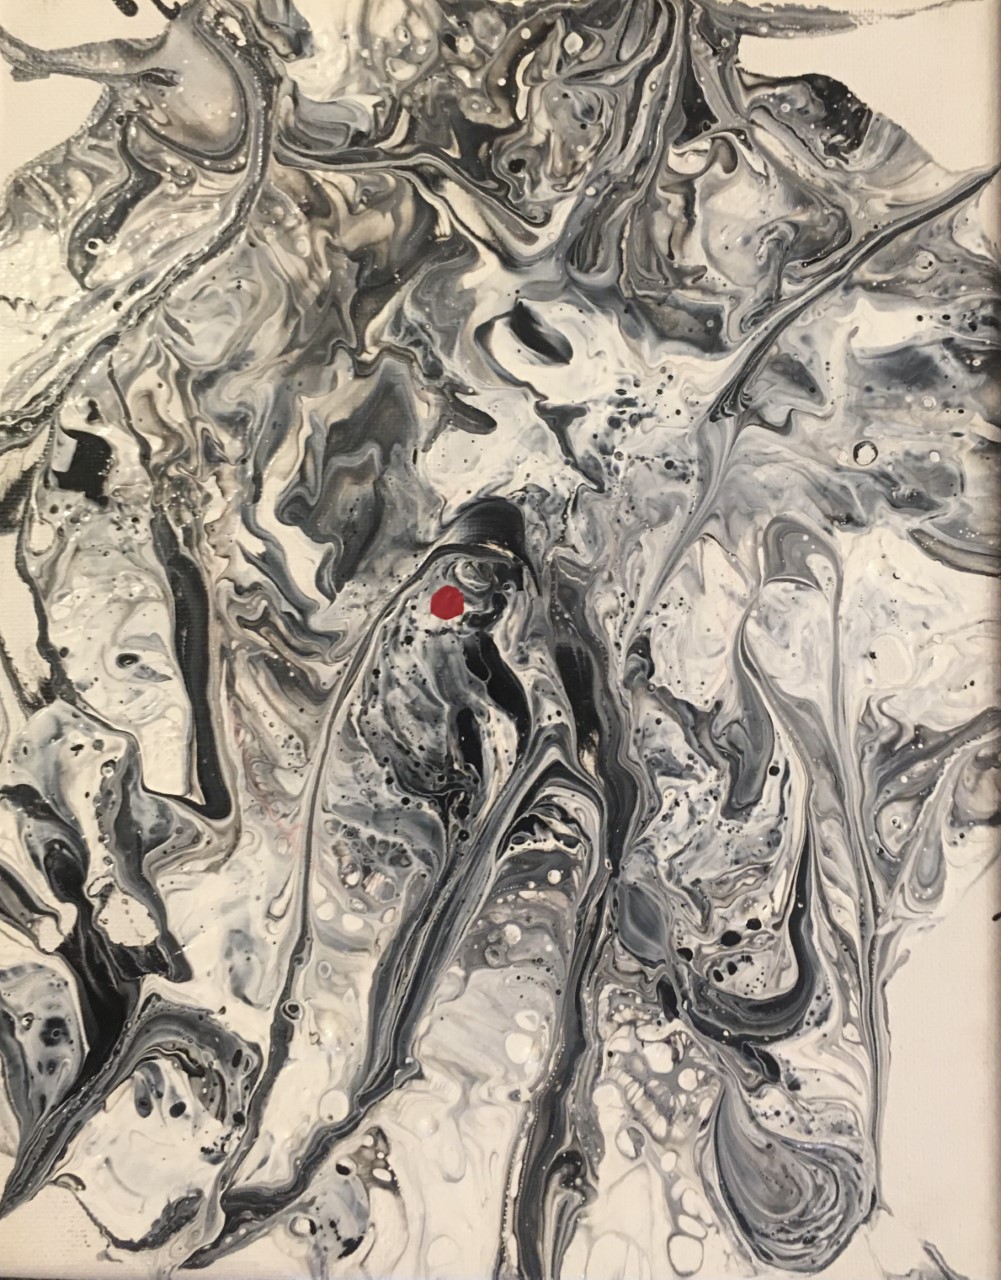 John Marron “Spot of Chaos Blood” poured acrylic, $100.00